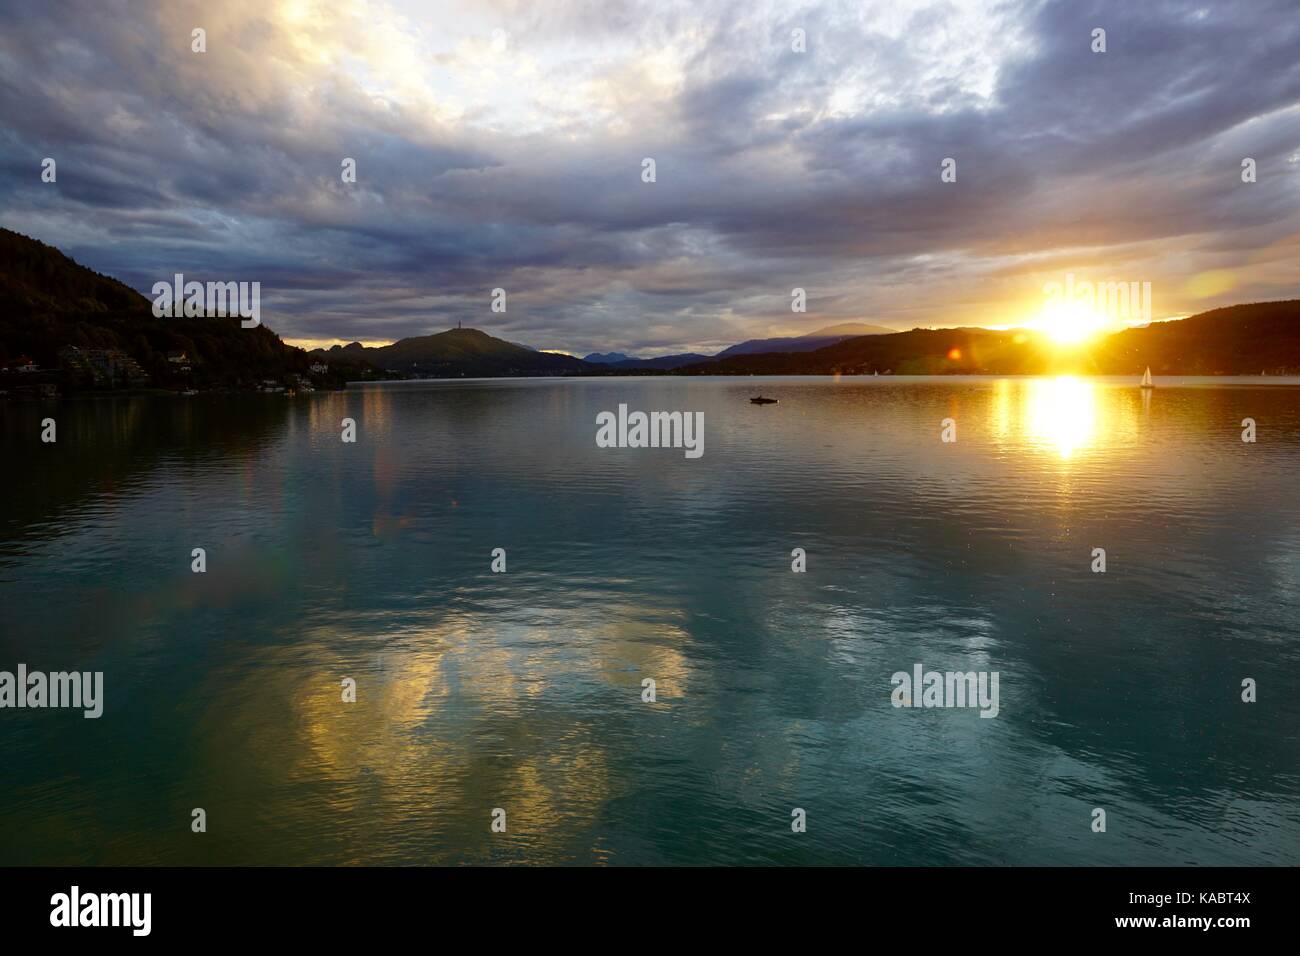 Sunset over the lake at Klagenfurt - Austria Stock Photo